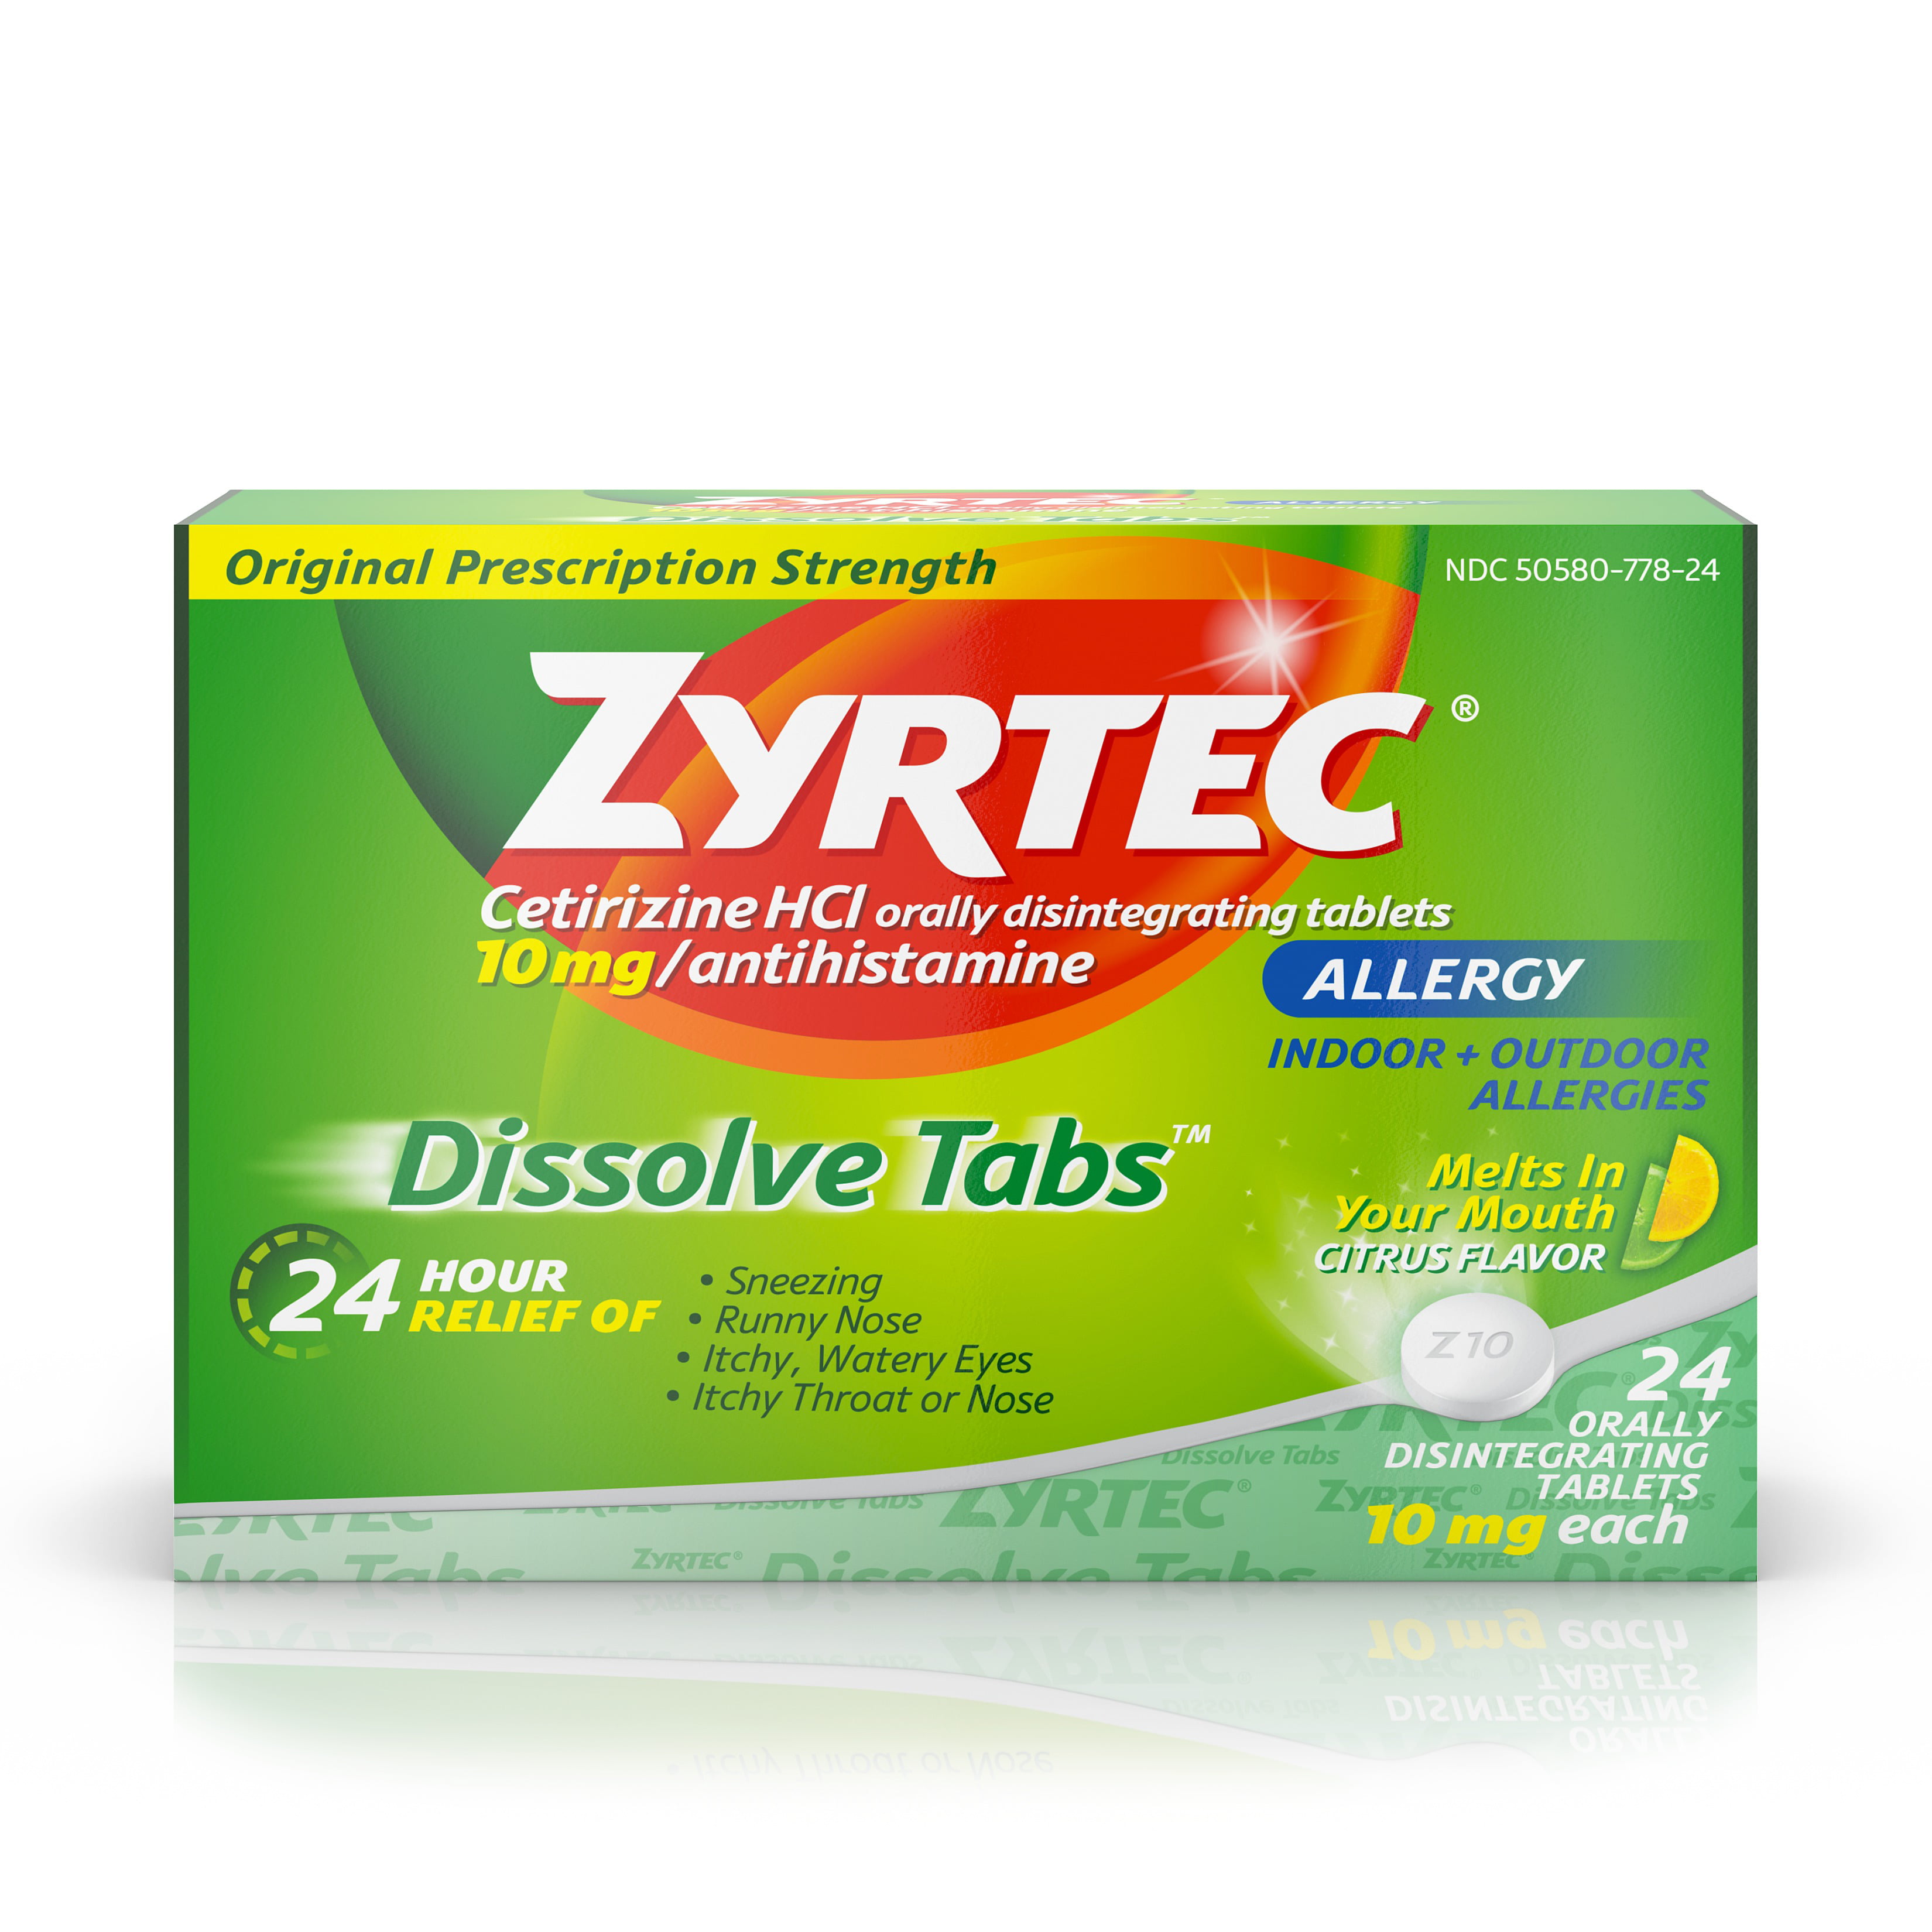 zyrtec-allergy-dissolve-tablets-in-citrus-flavor-cetirizine-hcl-24-ct